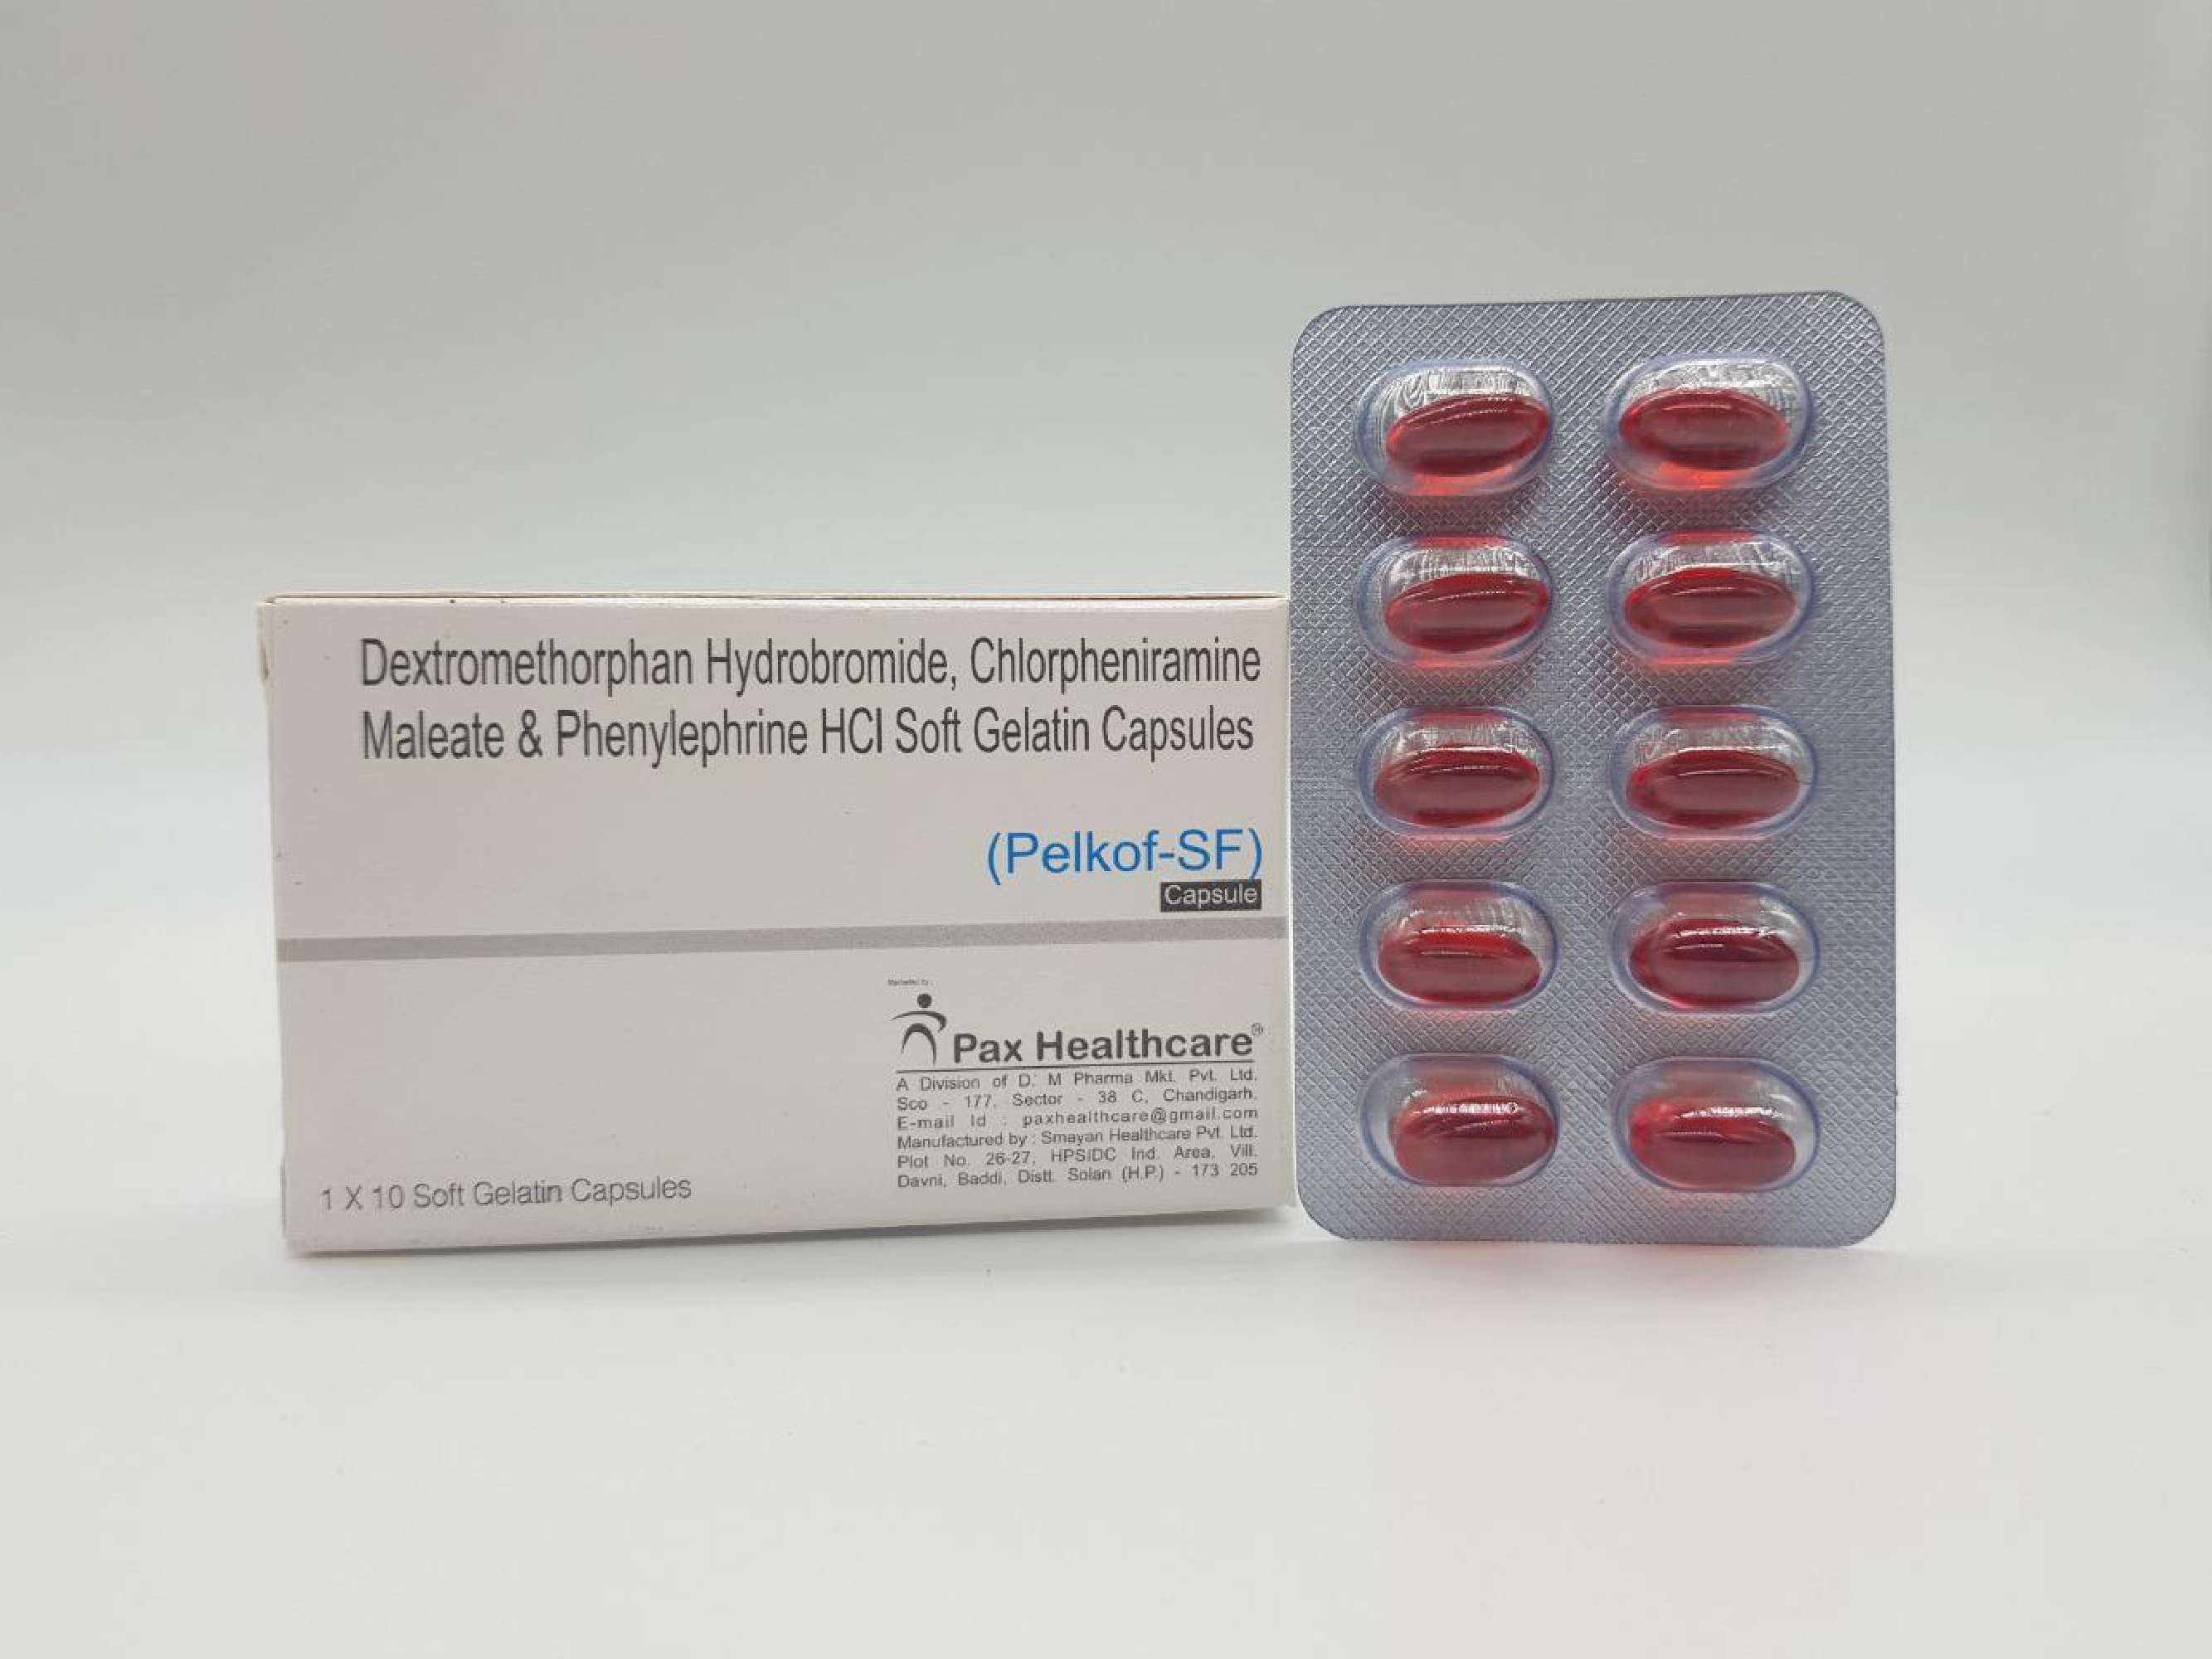 dextromethorphan hydrobromide, chlopheniramine maleate & phenylephrine hcl soft gelatin capsule